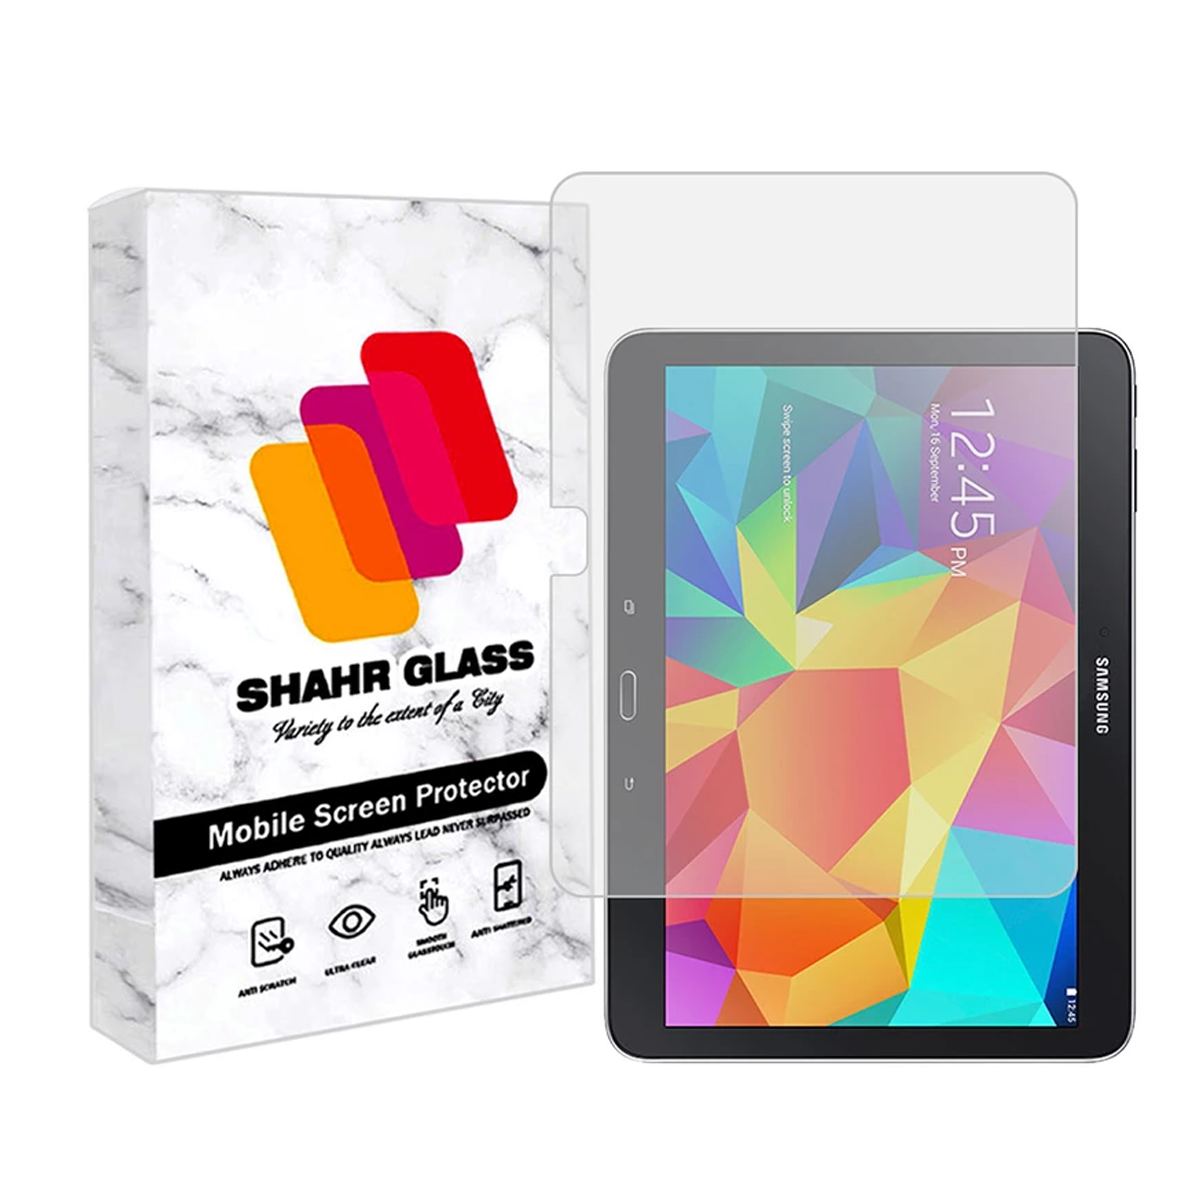 گلس تبلت سامسونگ Galaxy Tab 4 10.1 شهر گلس مدل TS2SHA -بی رنگ شفاف